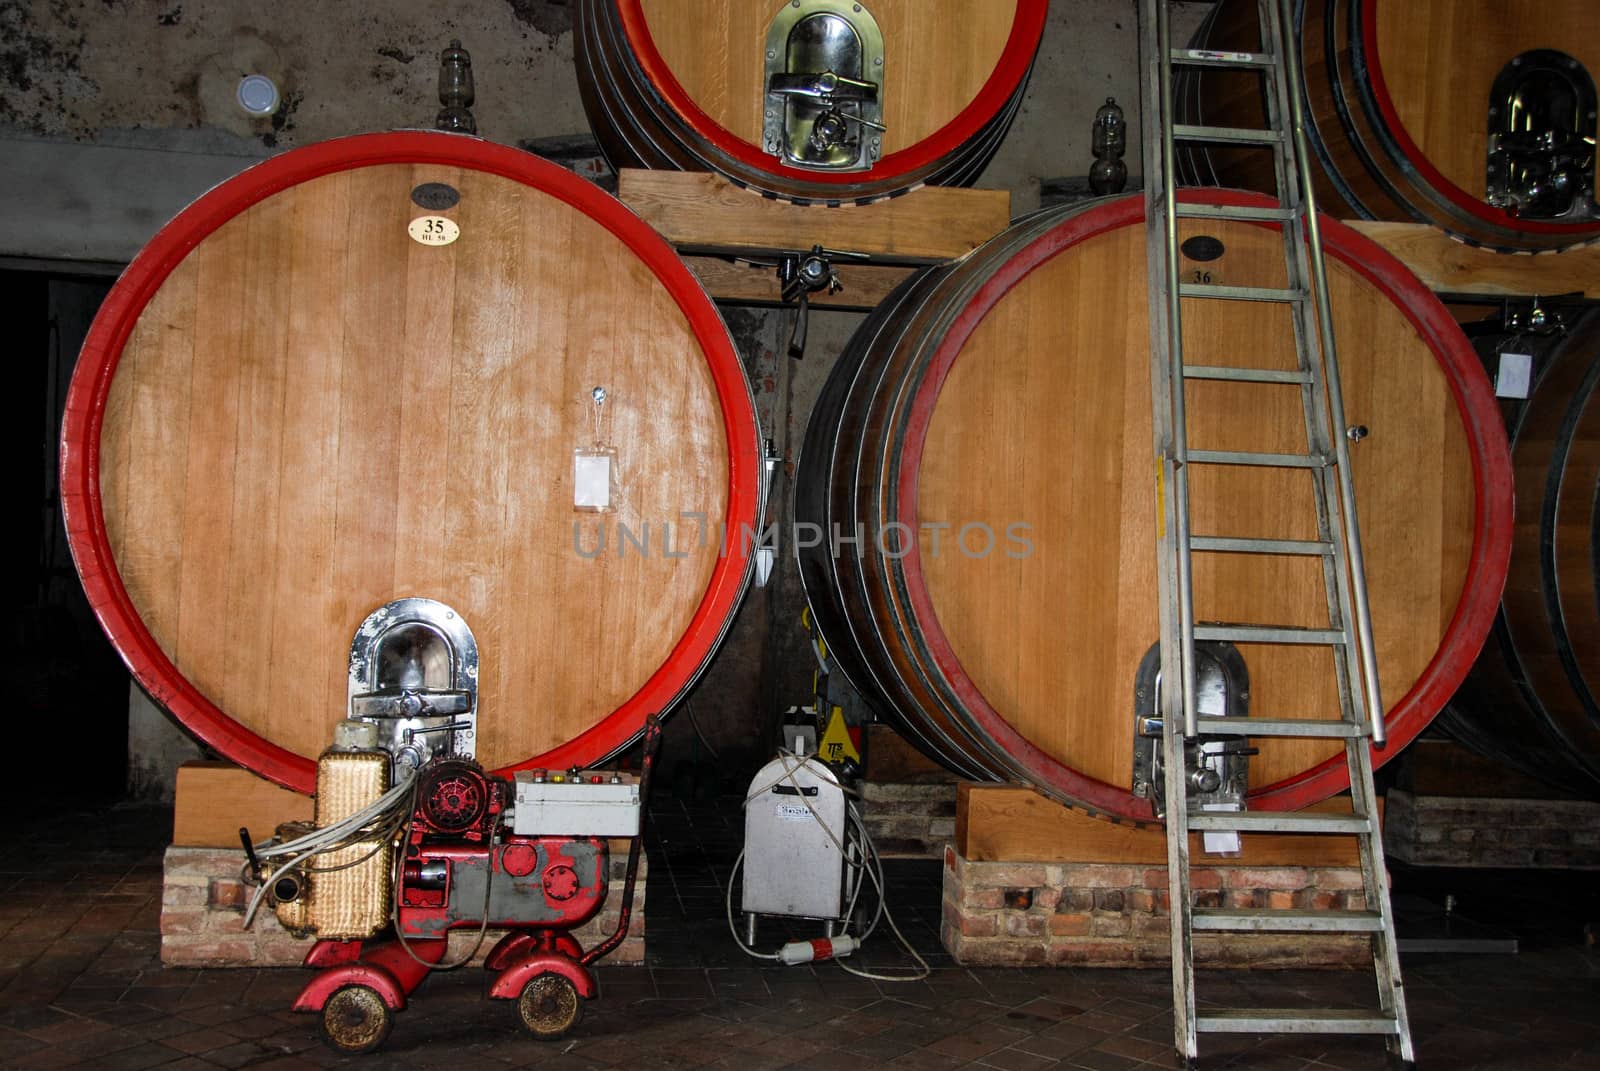 Wine cellar with Barolo wine